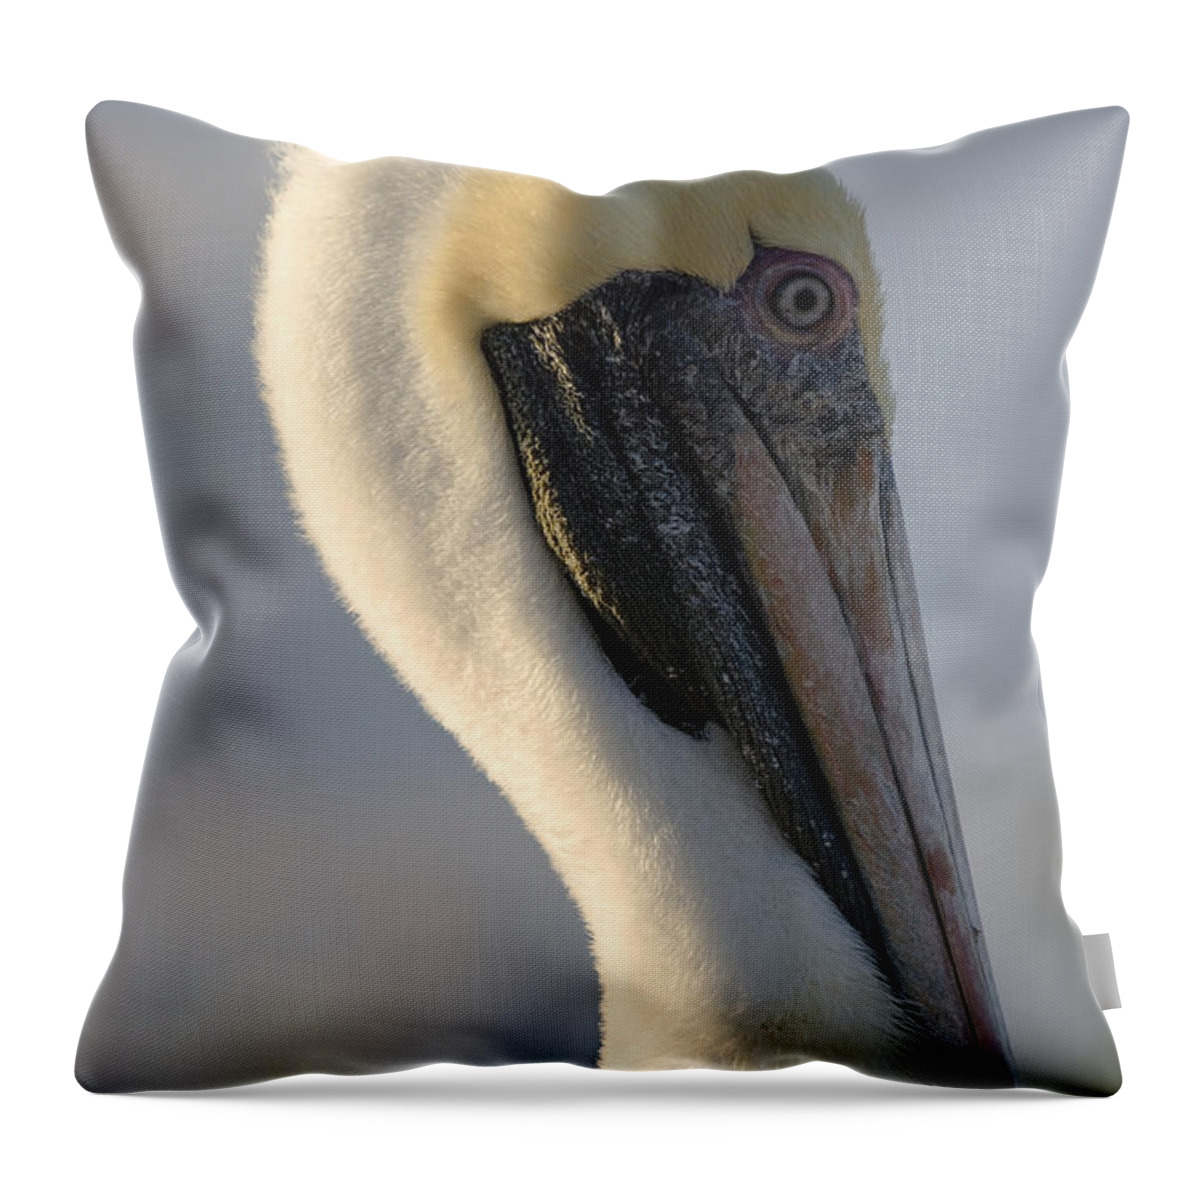 Bird Throw Pillow featuring the photograph Brown Pelican Profile by Ed Gleichman